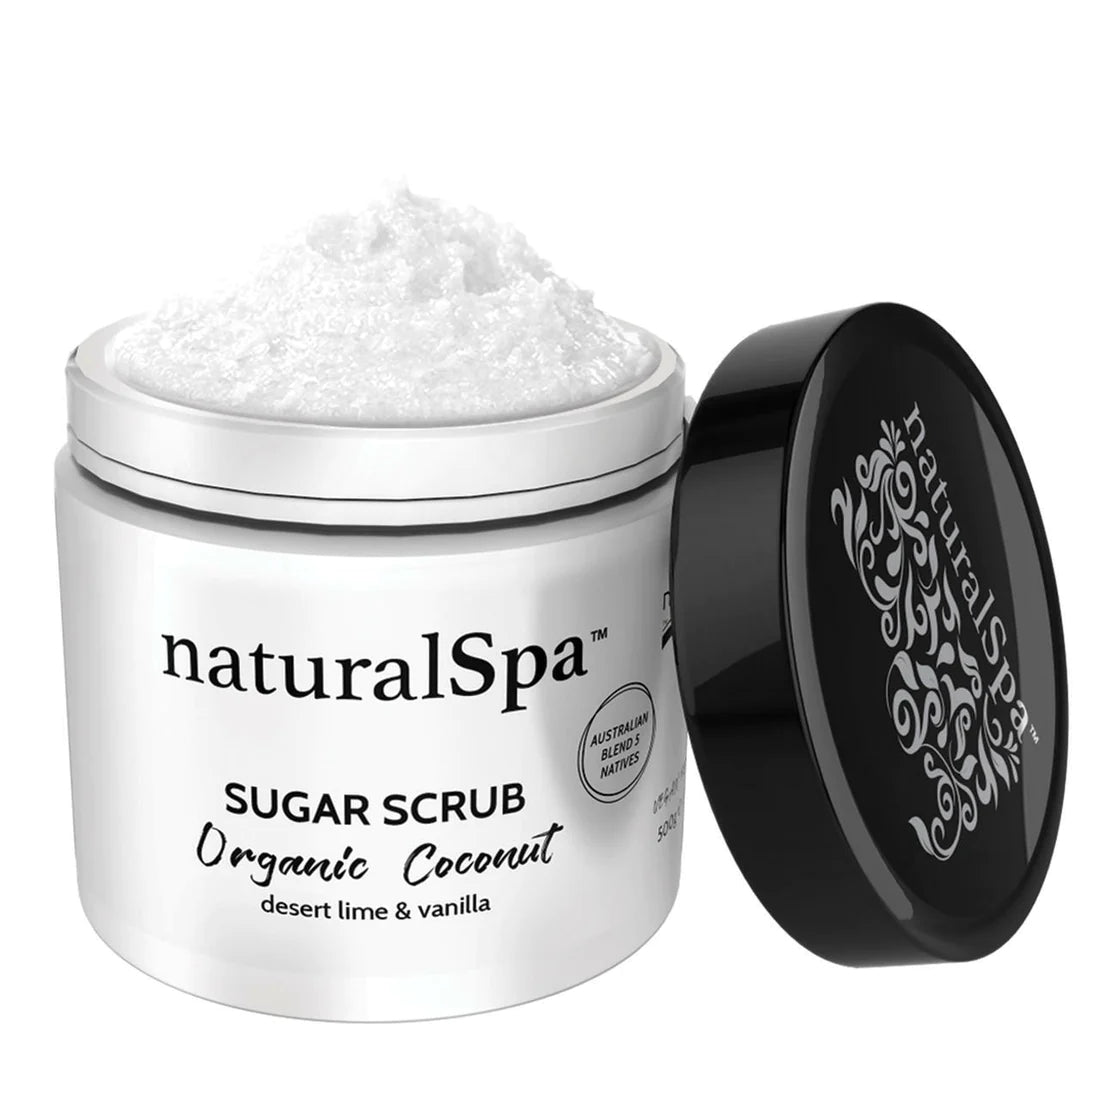 Naturalspa Organic Coconut Sugar Scrub 500g